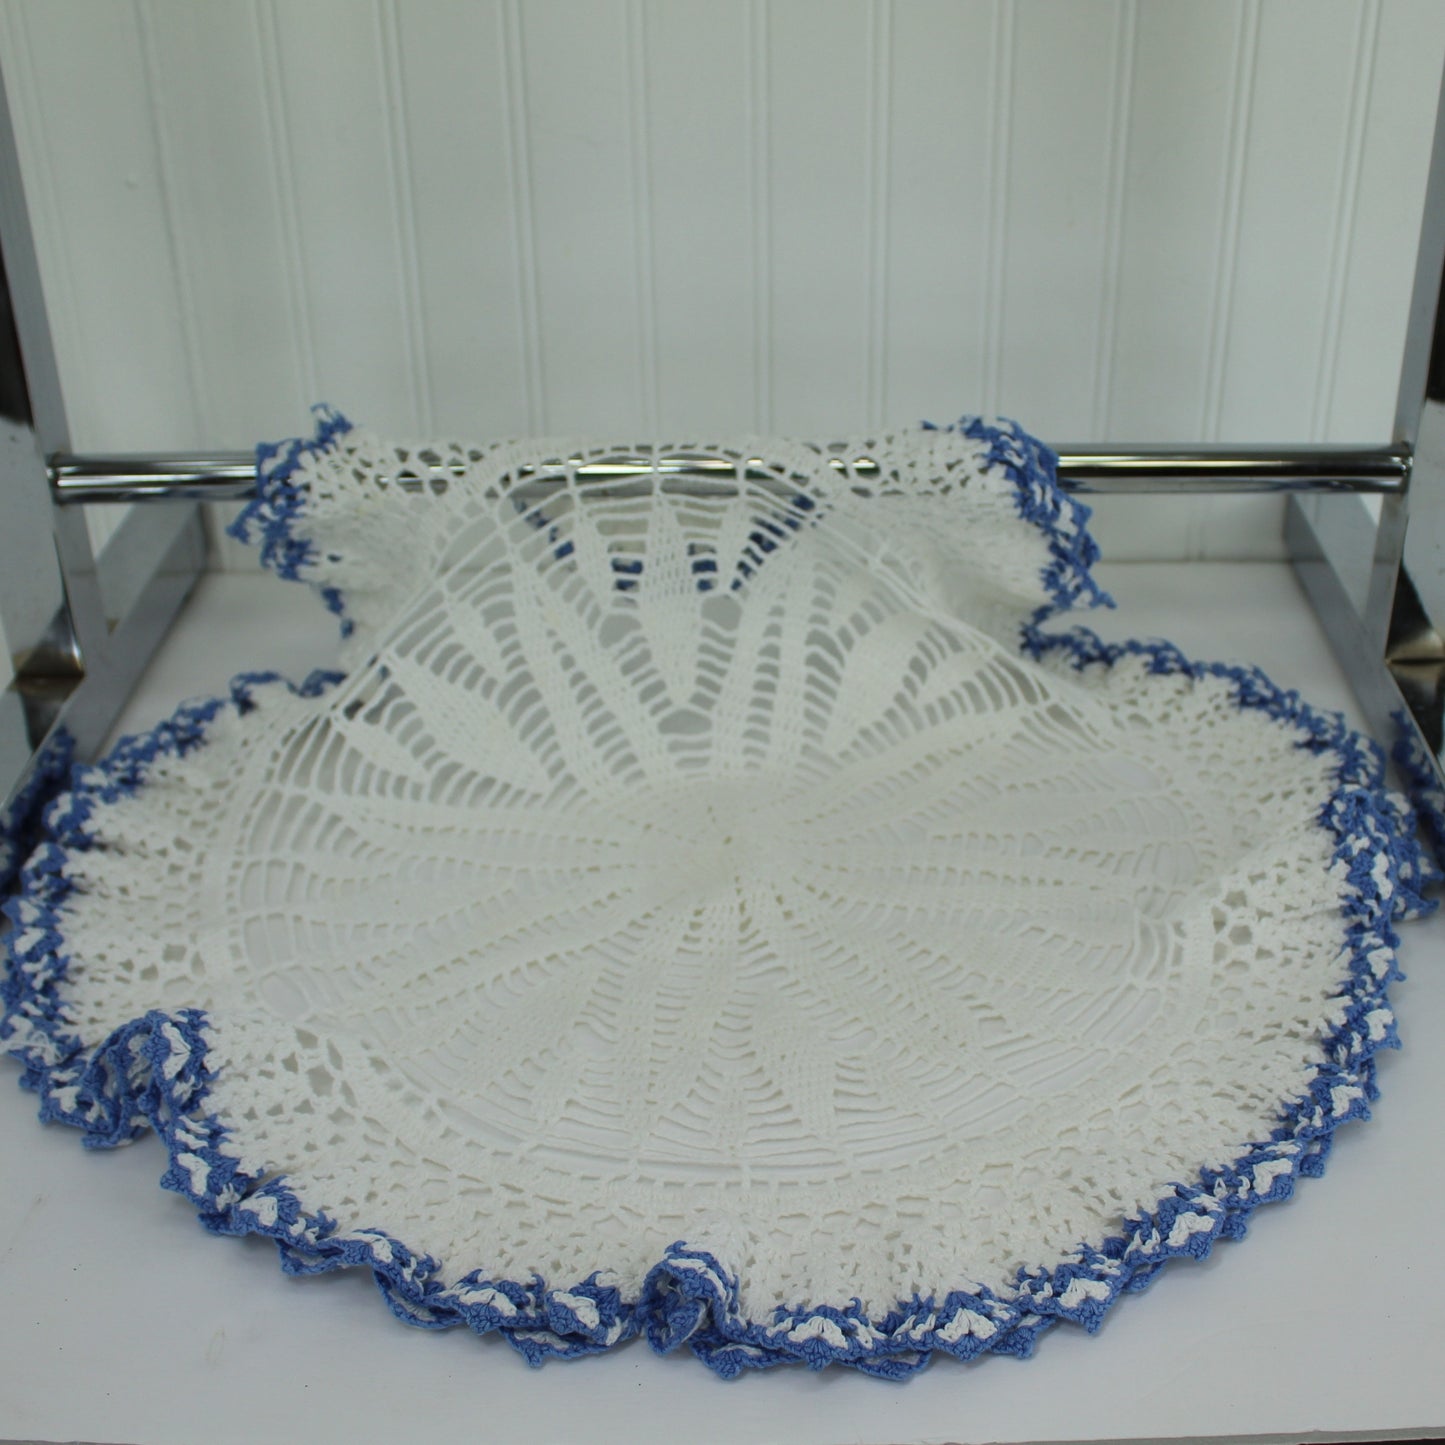 Large Round Crochet Doily Tablecloth White Heavy Blue Ruffle 21" Diameter nice craftsmanship